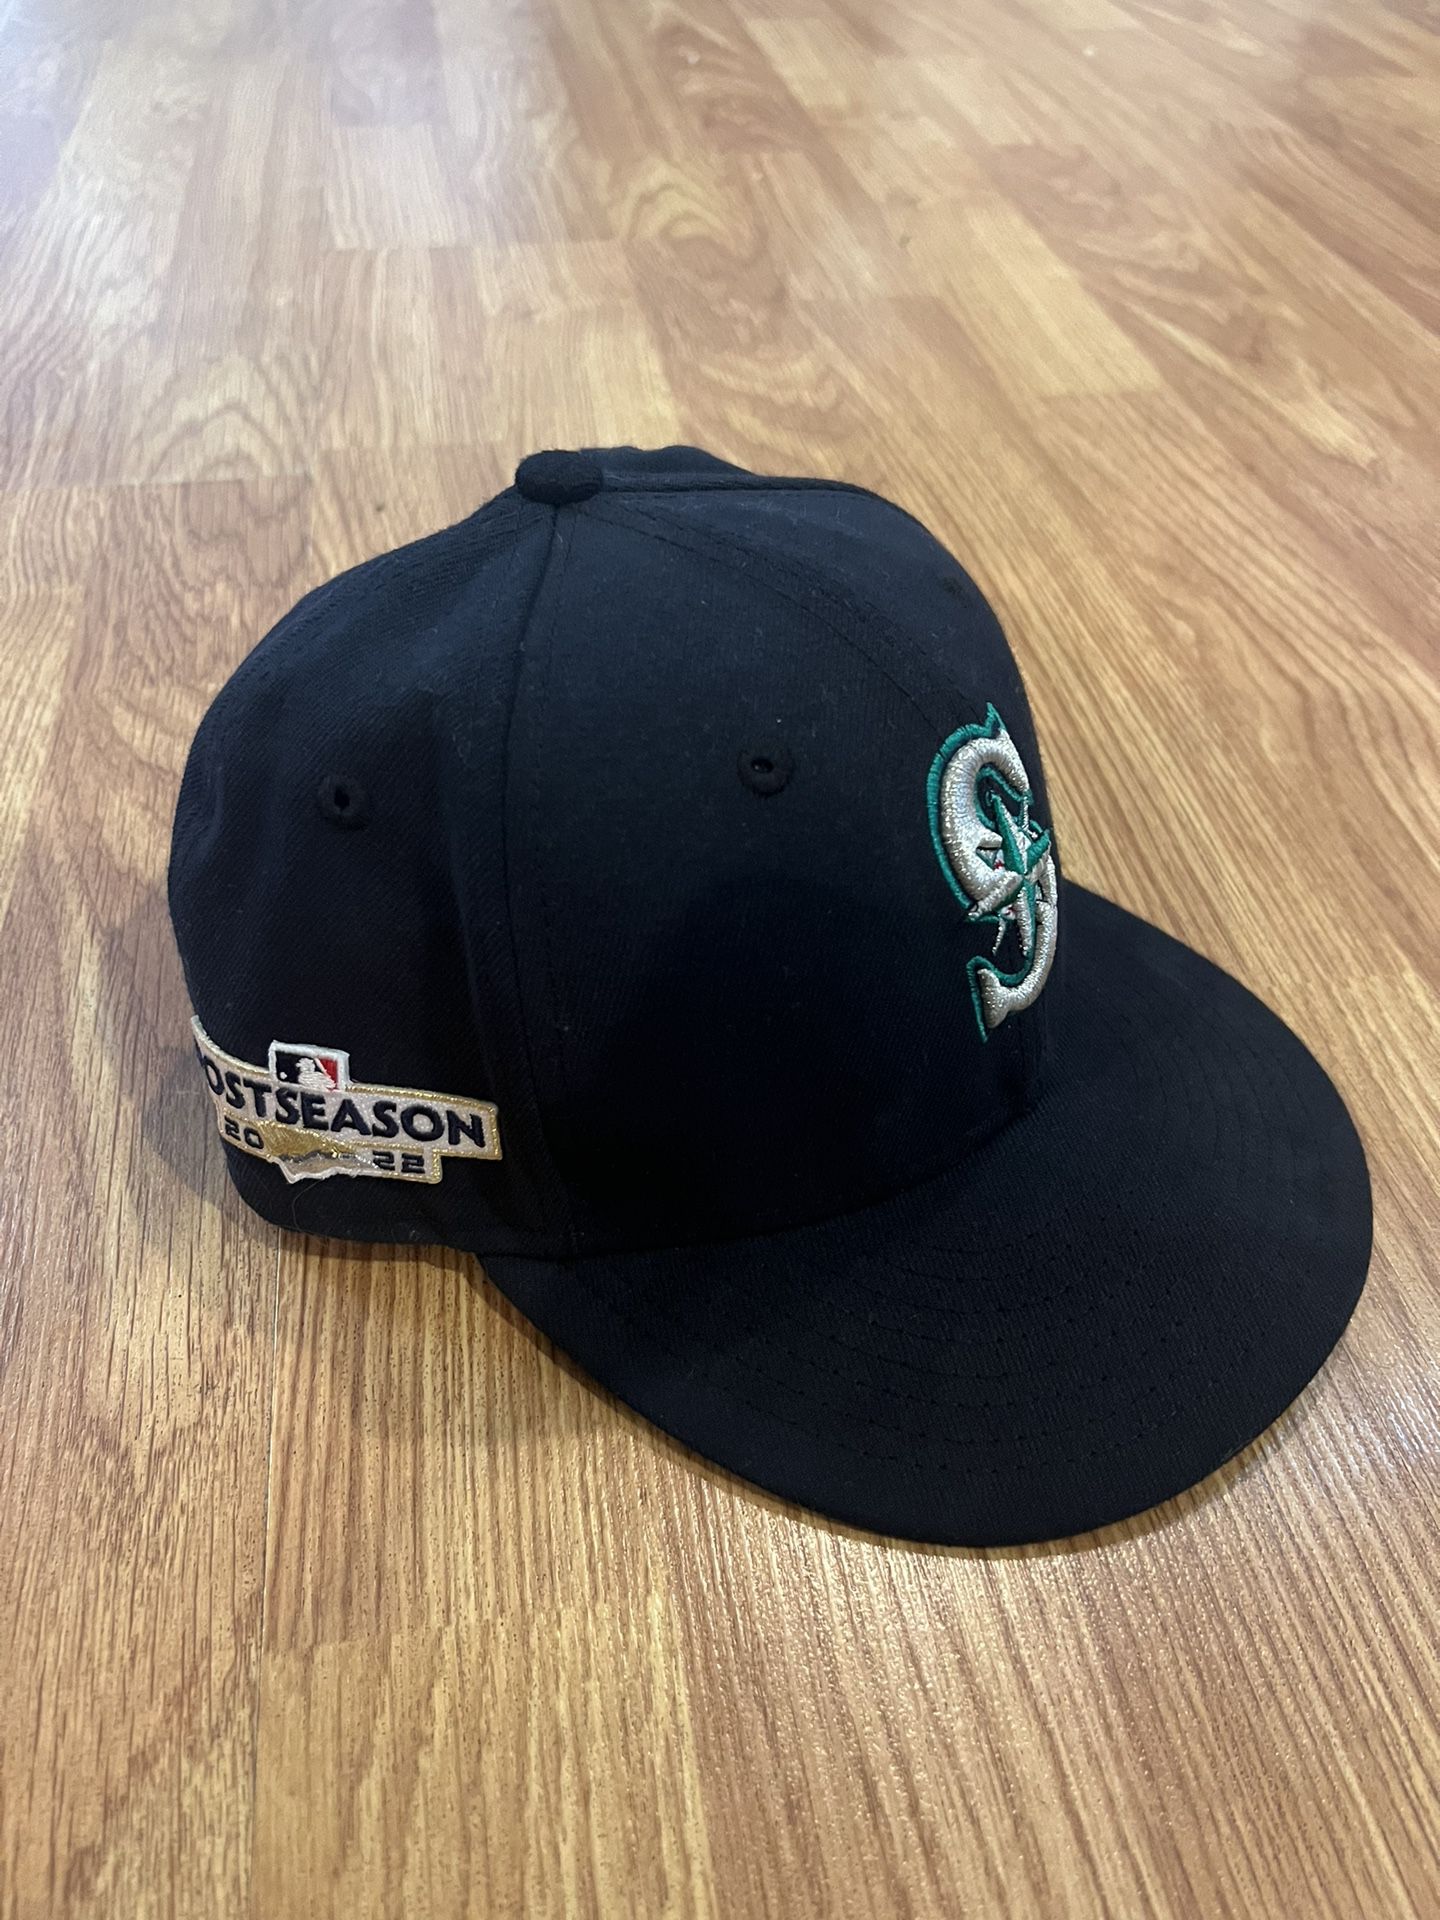 Seattle Mariners Postseason Fitted Hat 6 7/8 New Era